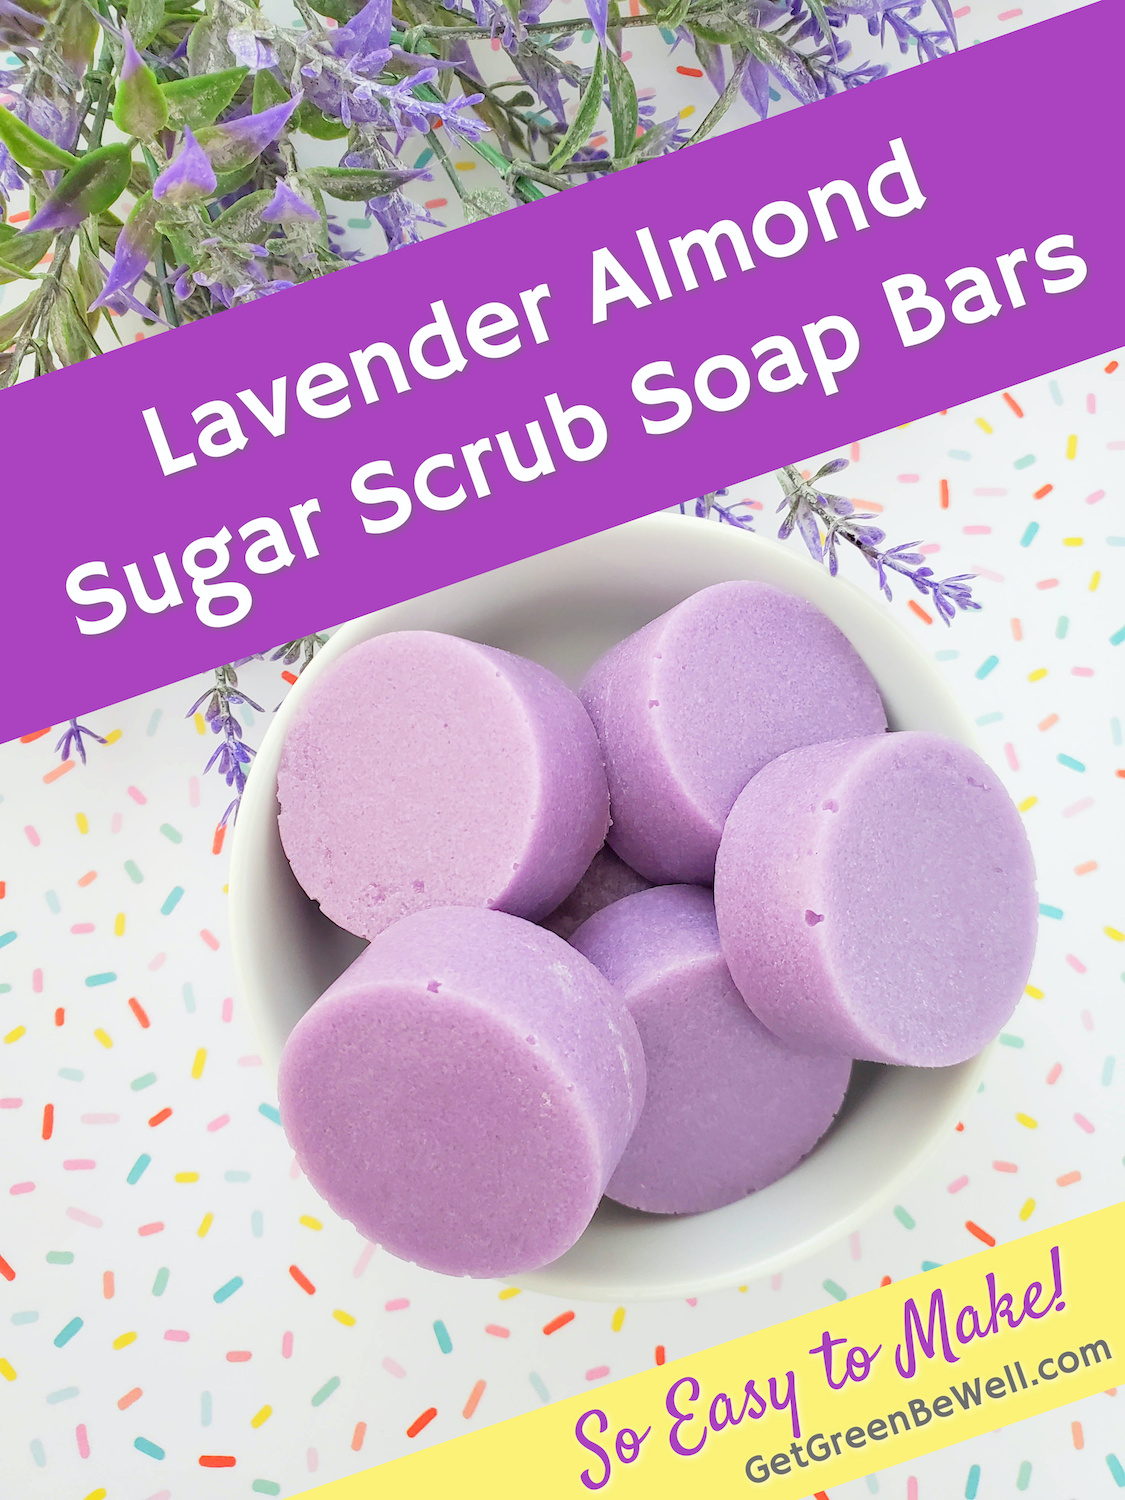 Lavender Almond Sugar Scrub Soap Bar Recipe Get Green Be Well 5996